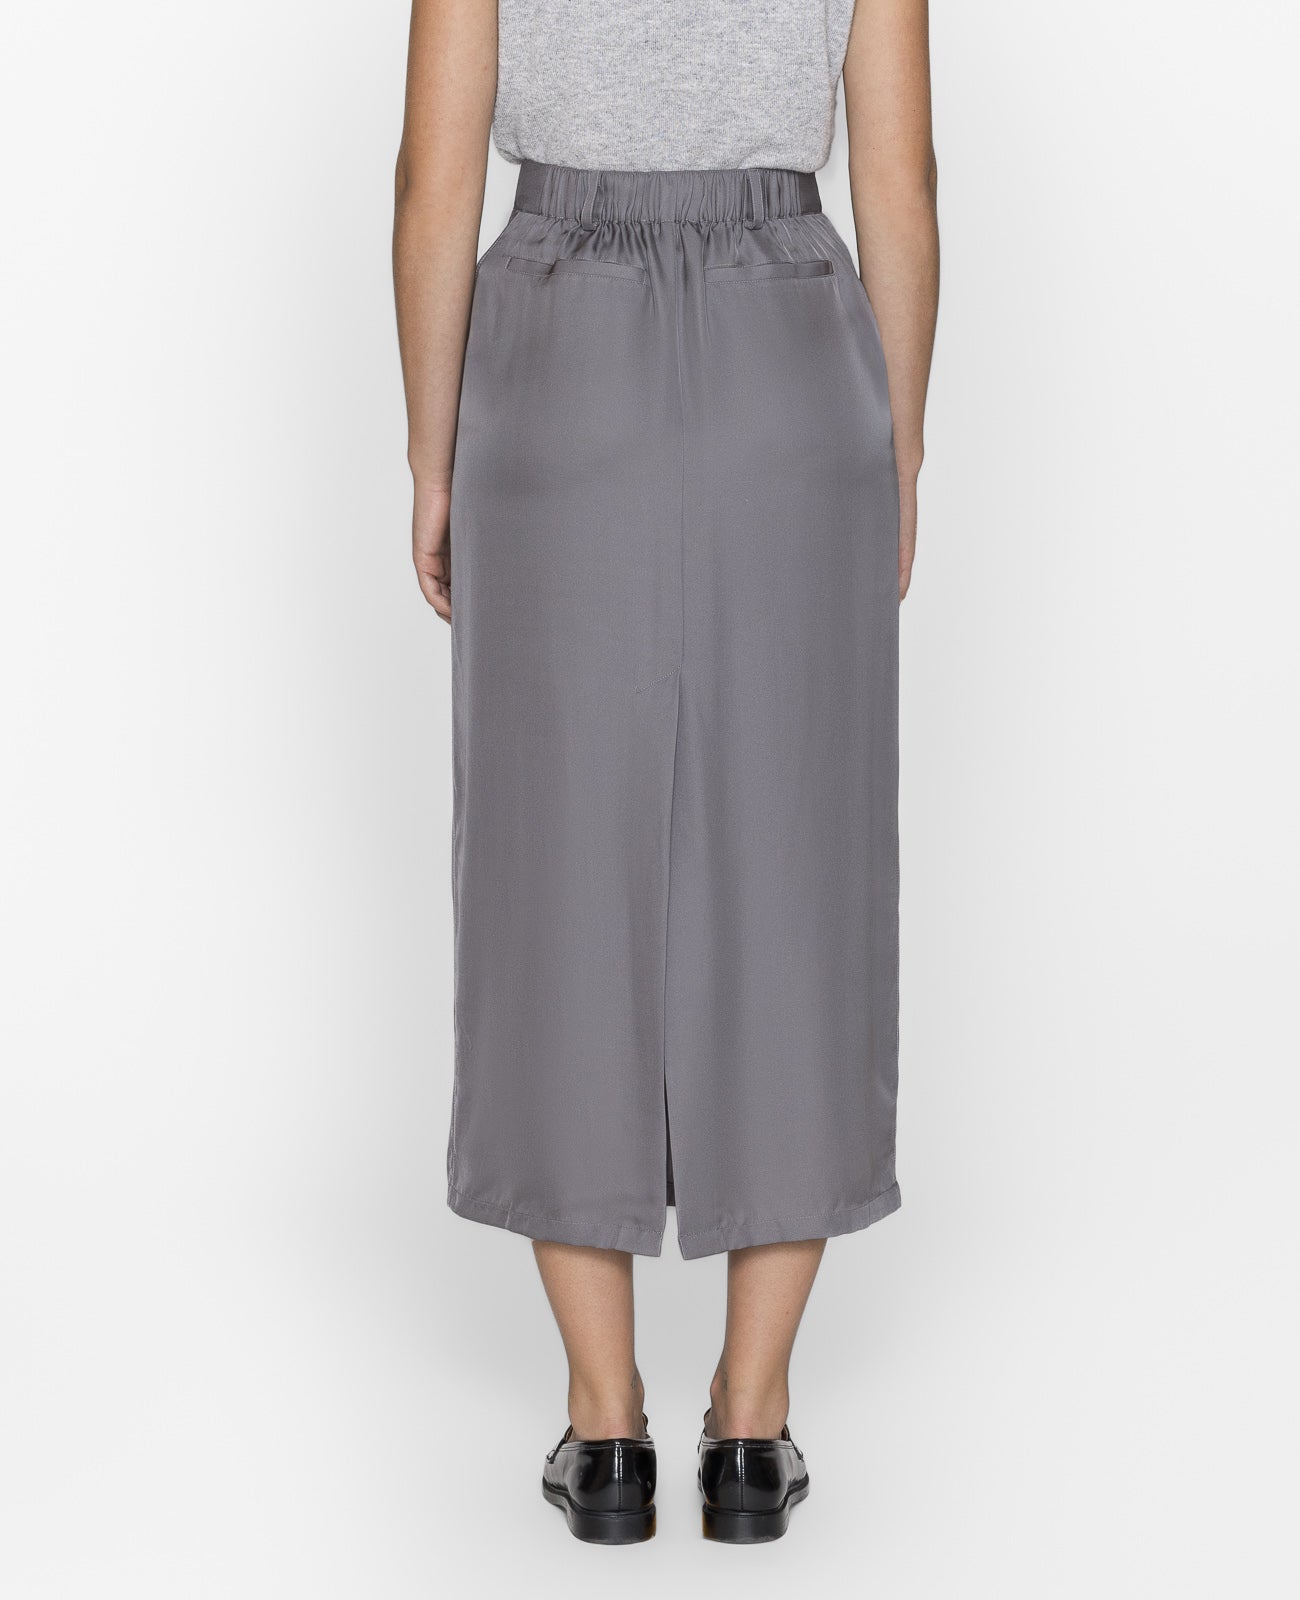 Silk Column Skirt in STORM | GRANA #color_storm